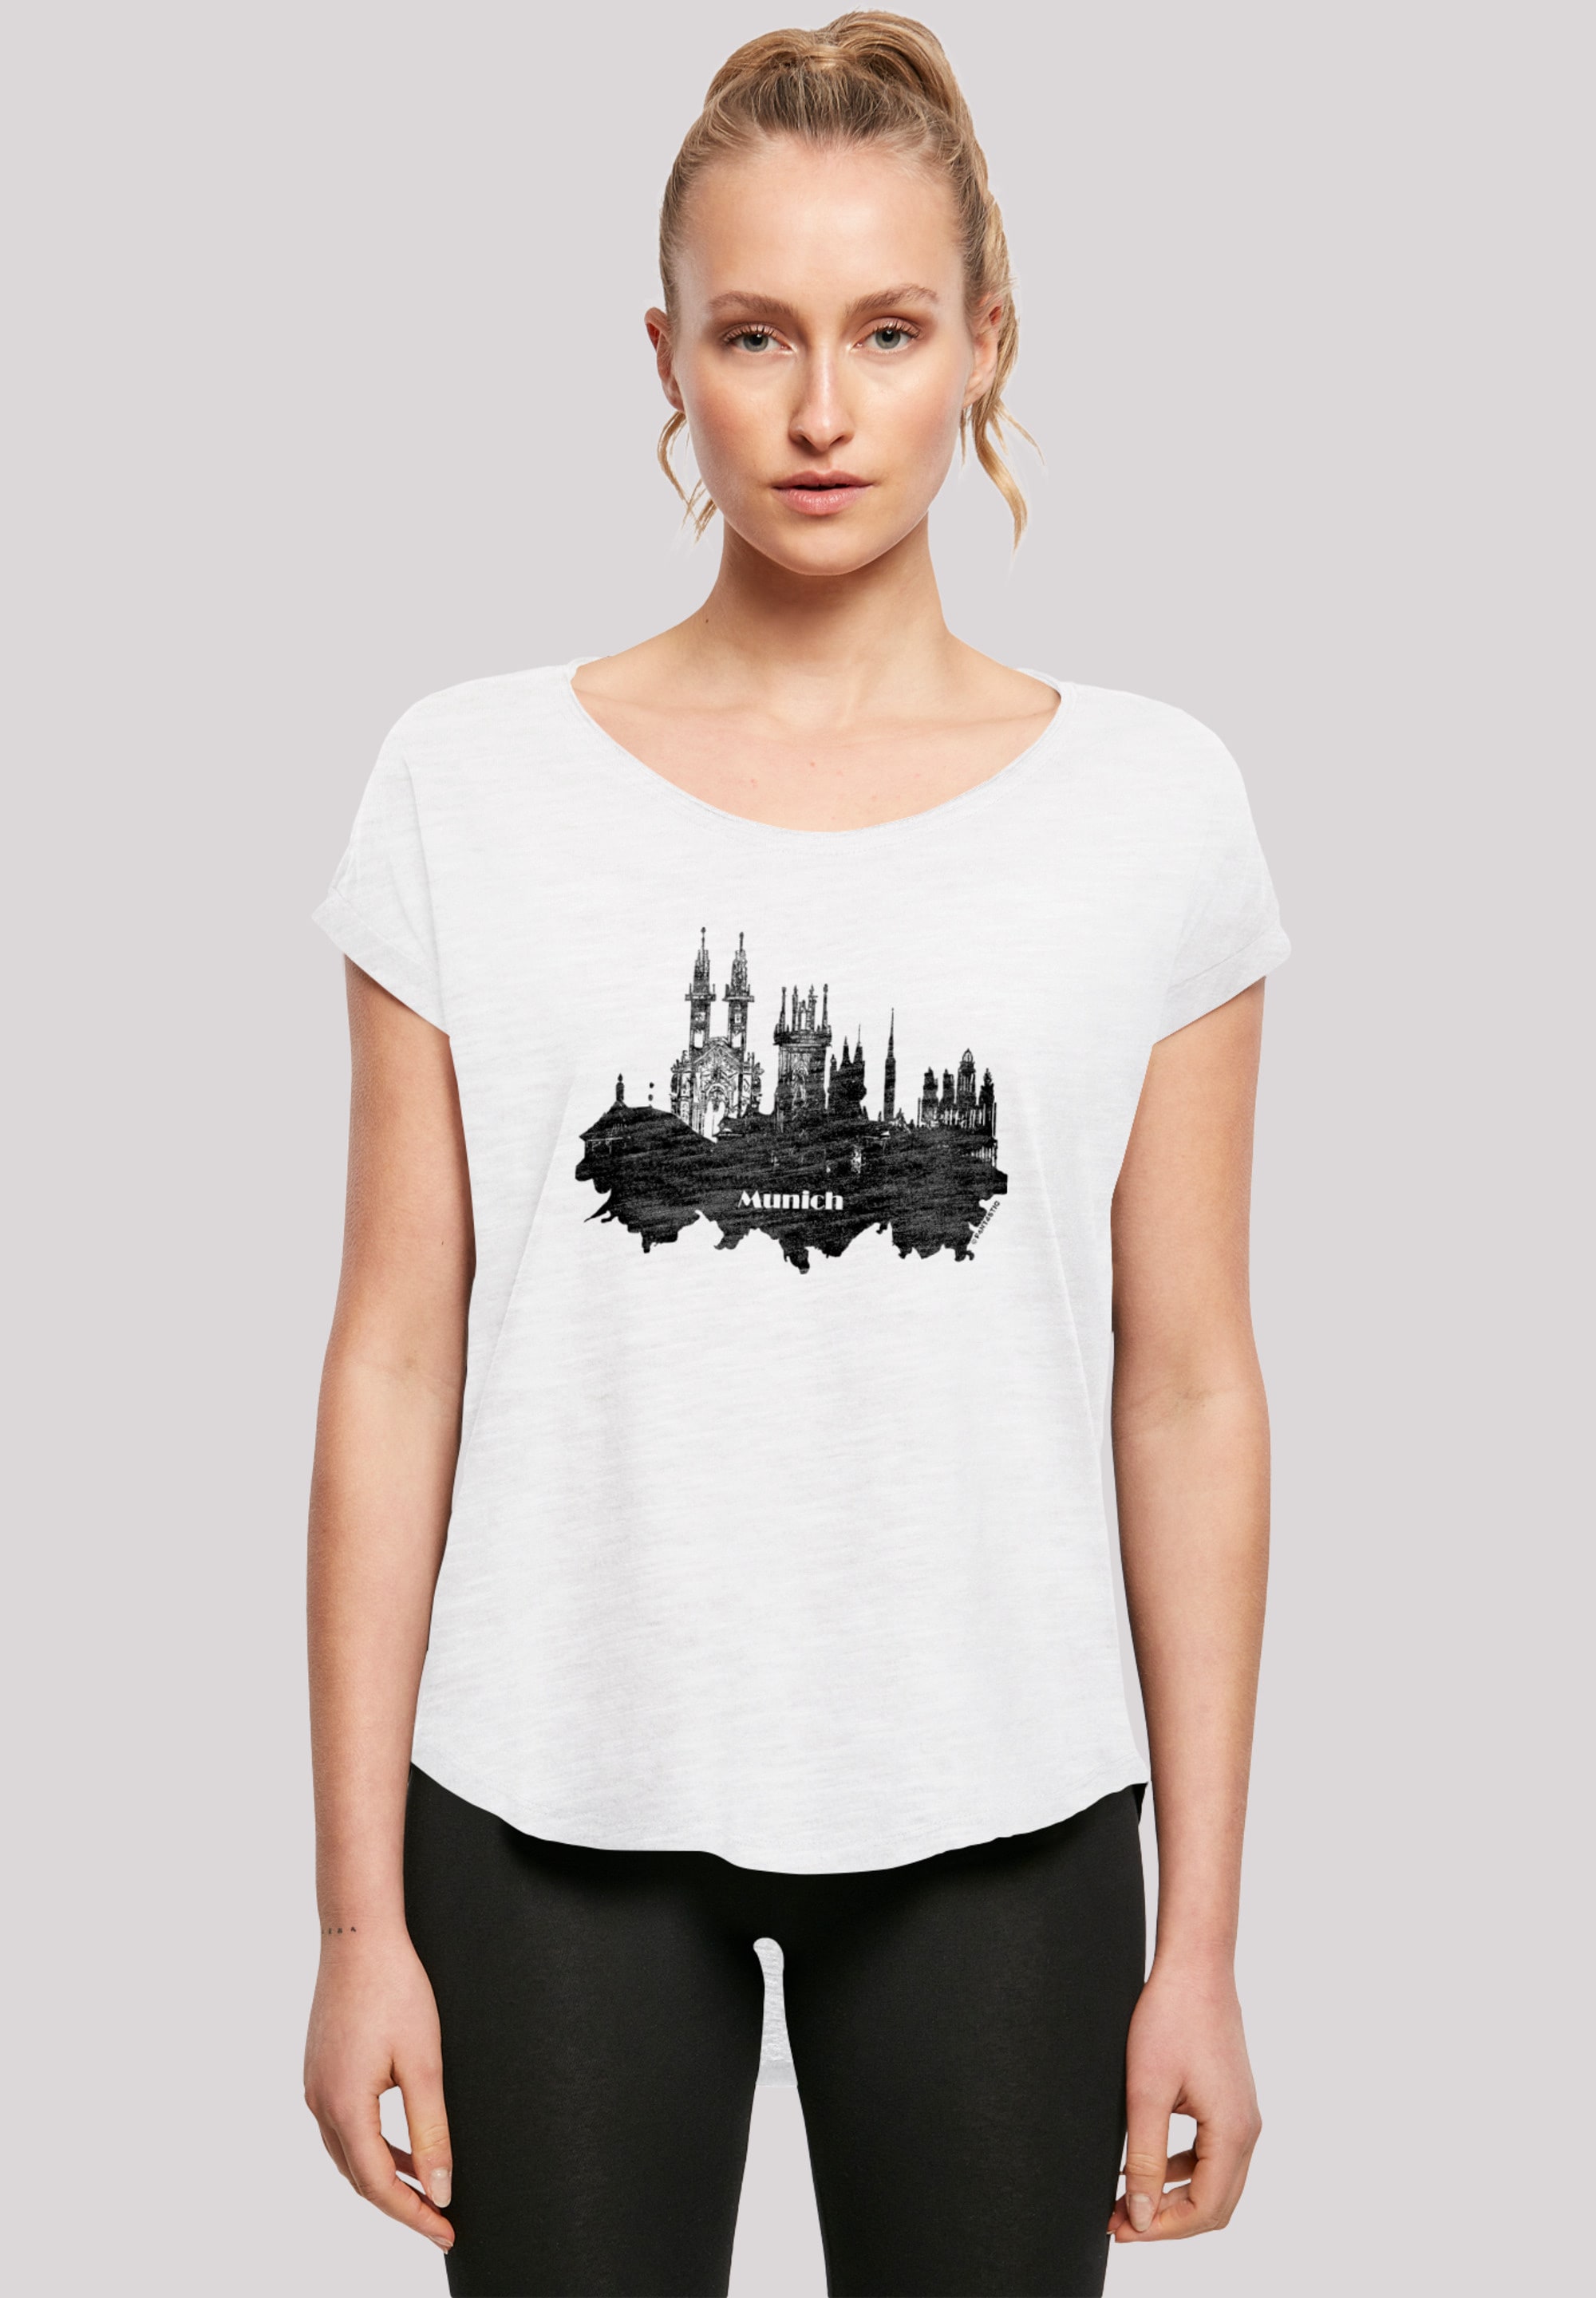 T-Shirt Munich Print skyline«, »Cities F4NT4STIC Collection online -